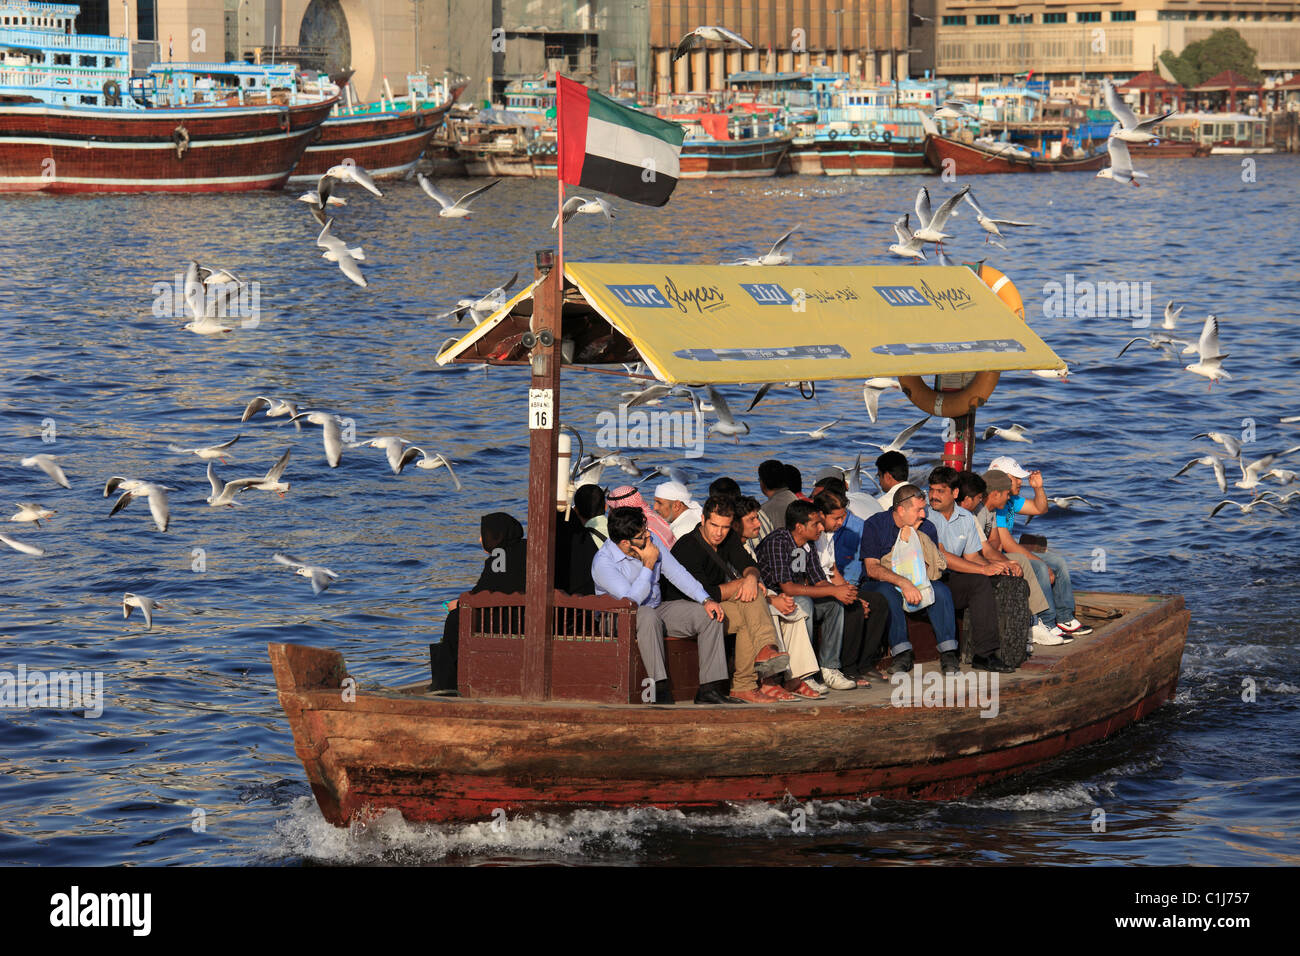 United Arab Emirates, Dubai, Creek, abra boat, Stock Photo